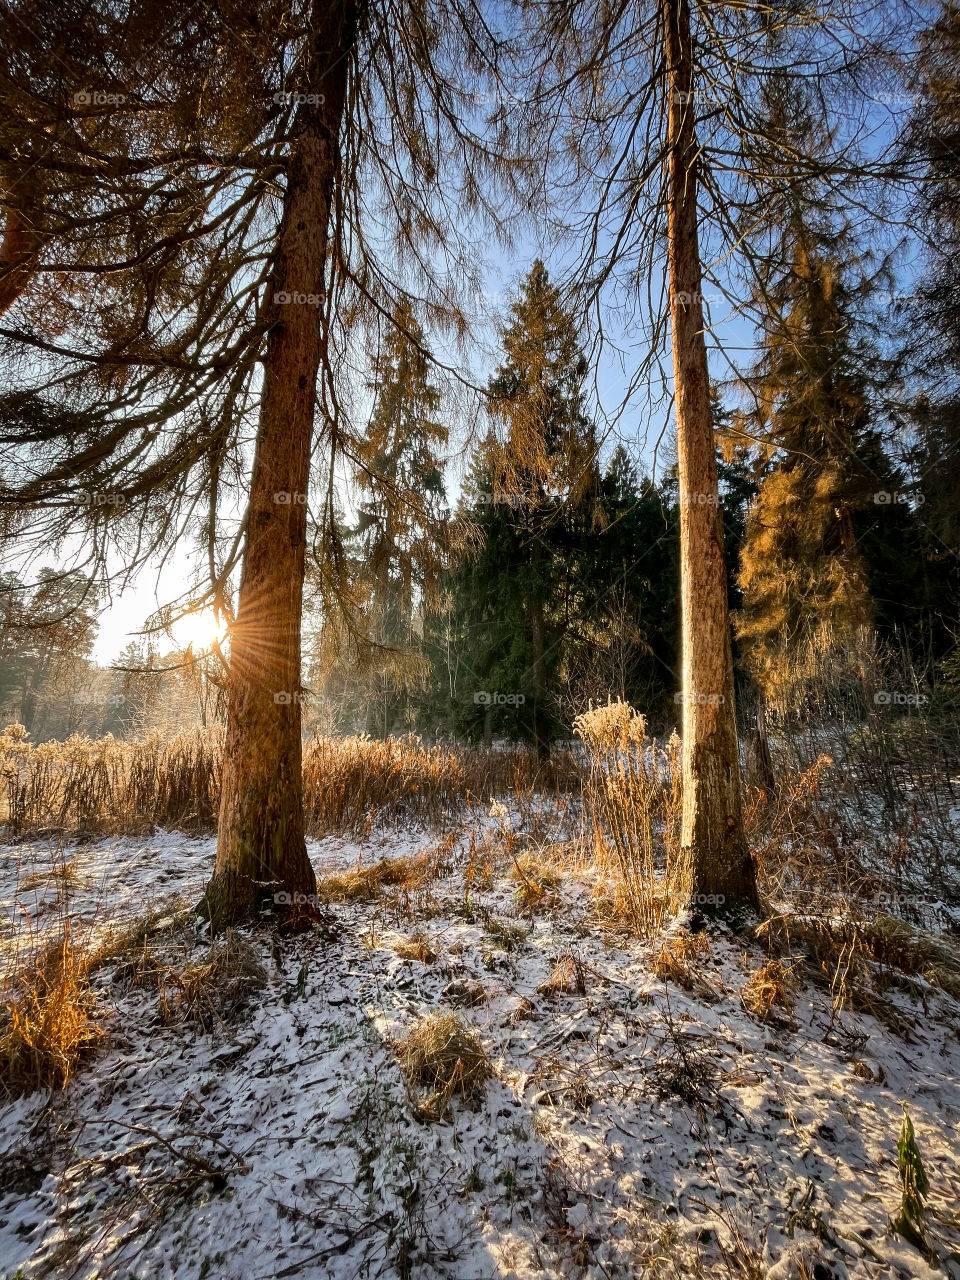 Winter landscape in sunny forest in December 